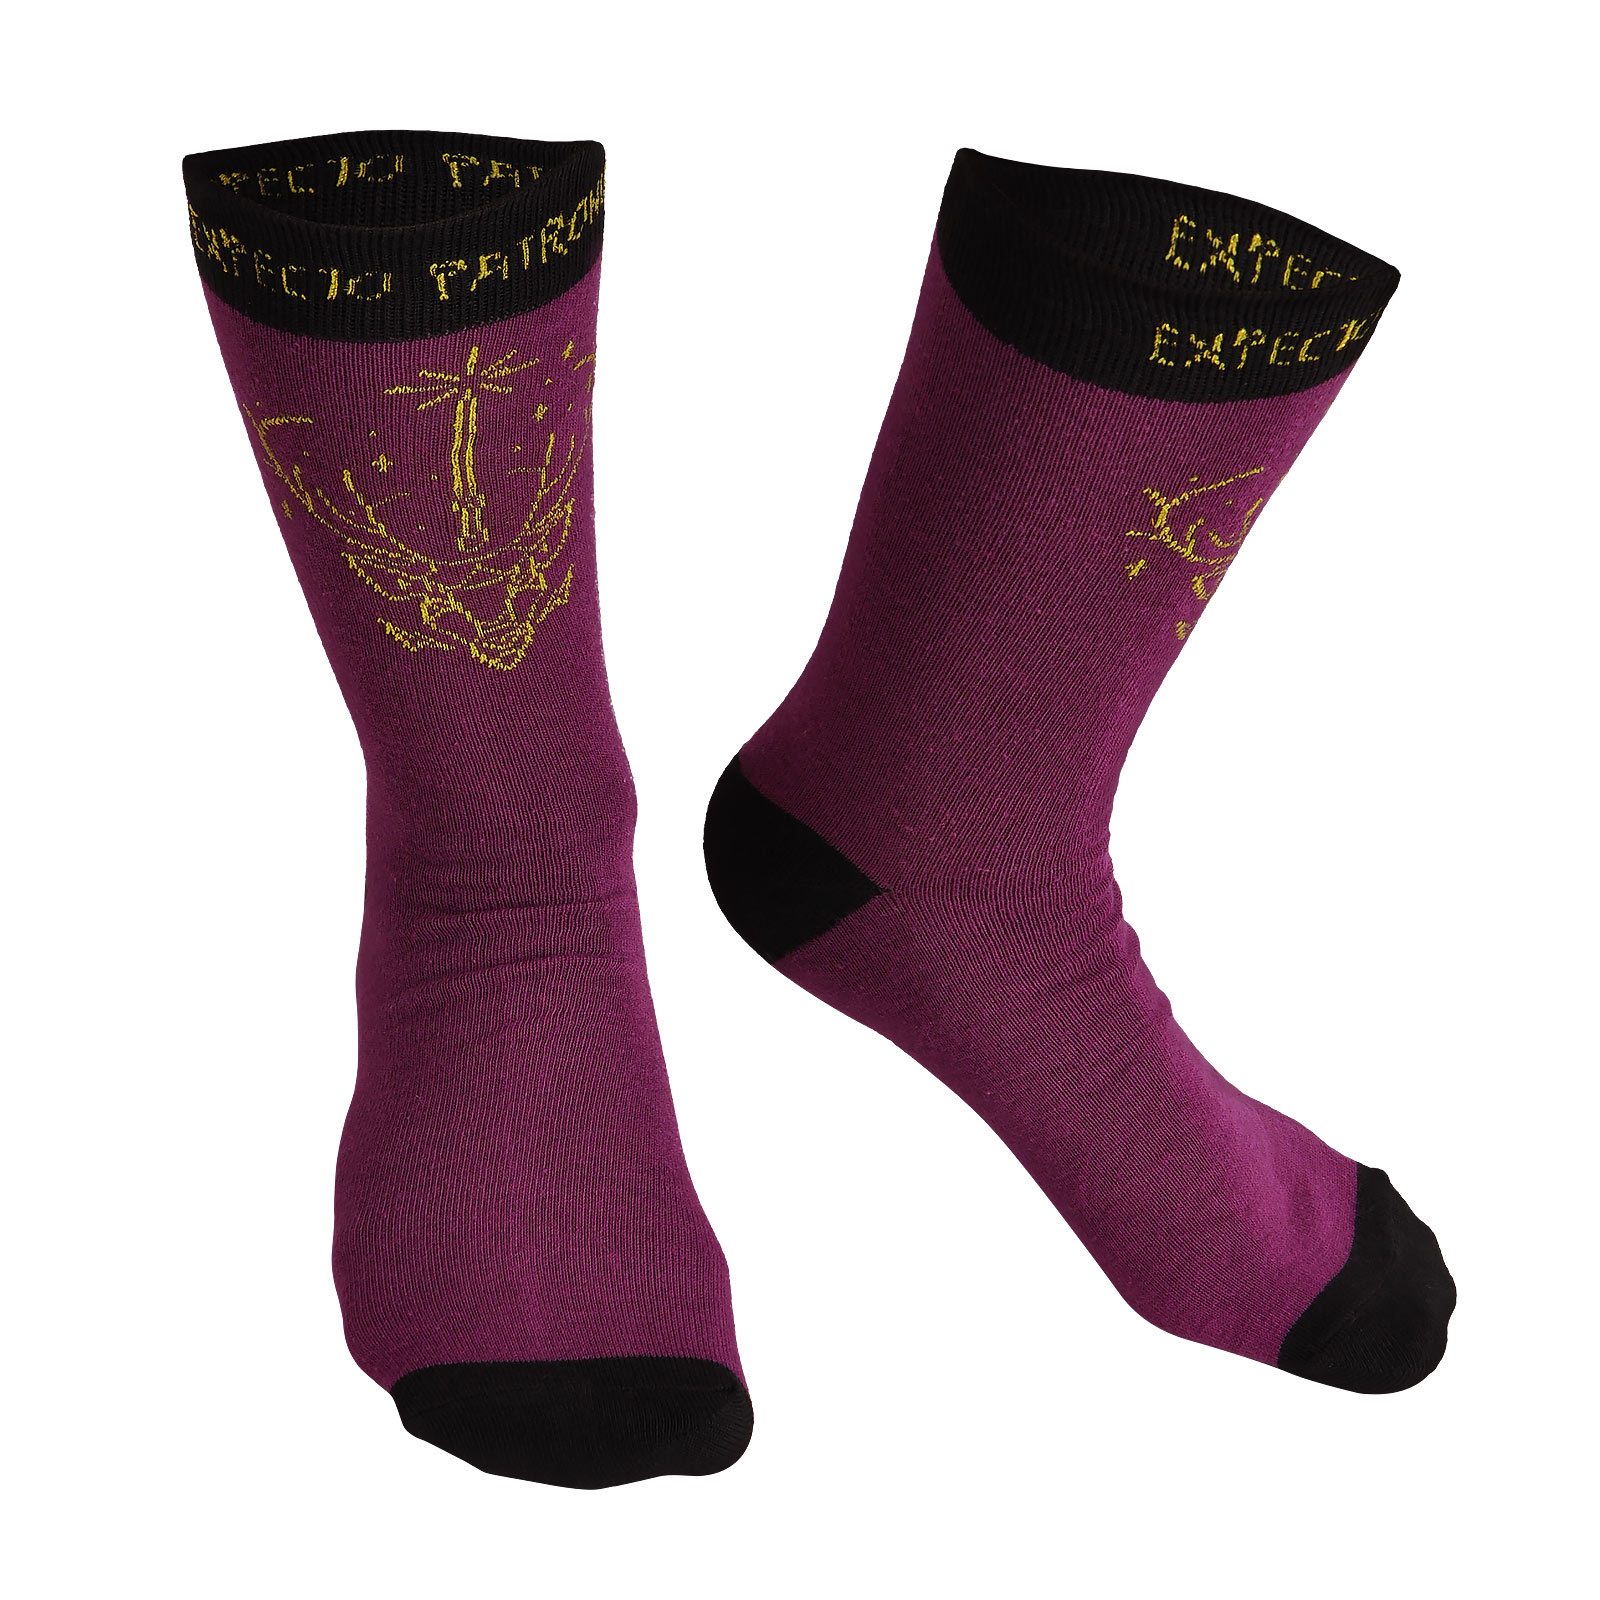 Harry Potter - Expecto Patronum Women's Socks